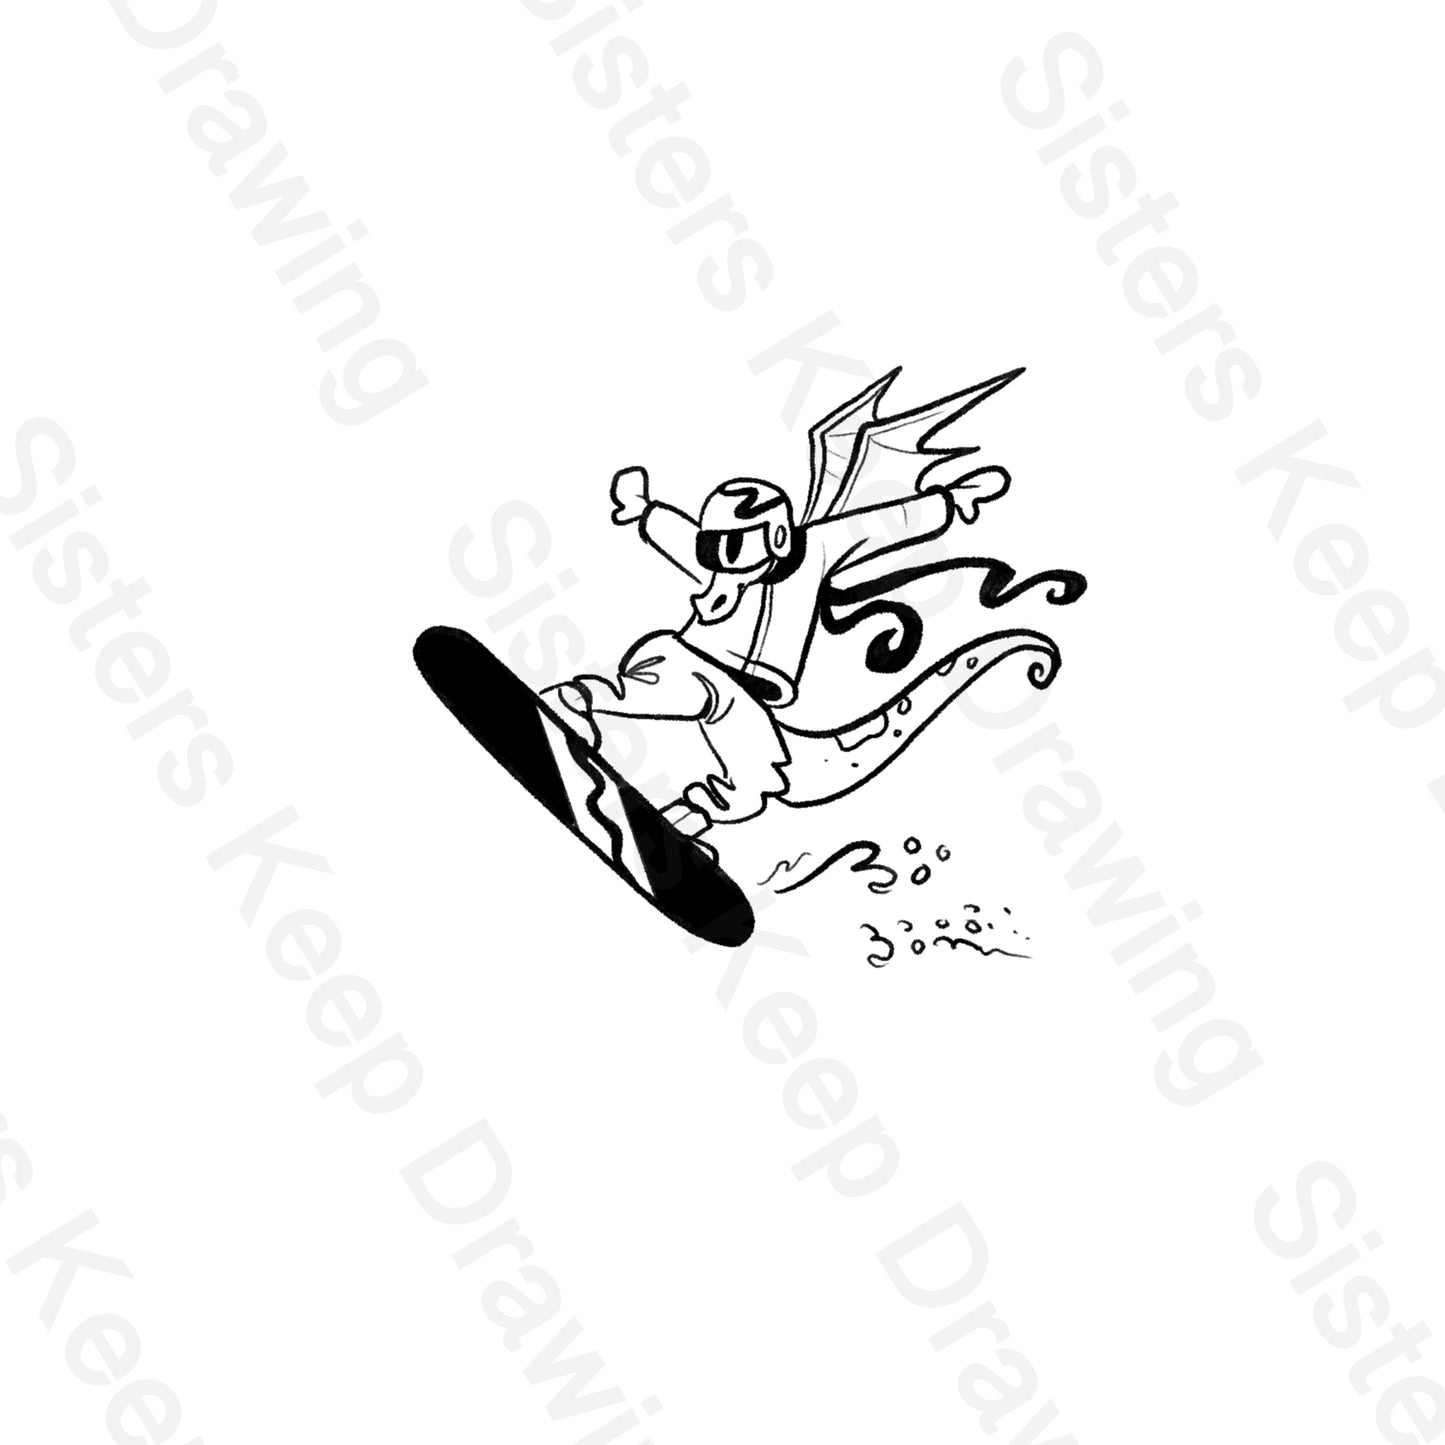 Tiny Dragon snowboarding-Tattoo Transparent Permission PNG- instant download digital printable artw